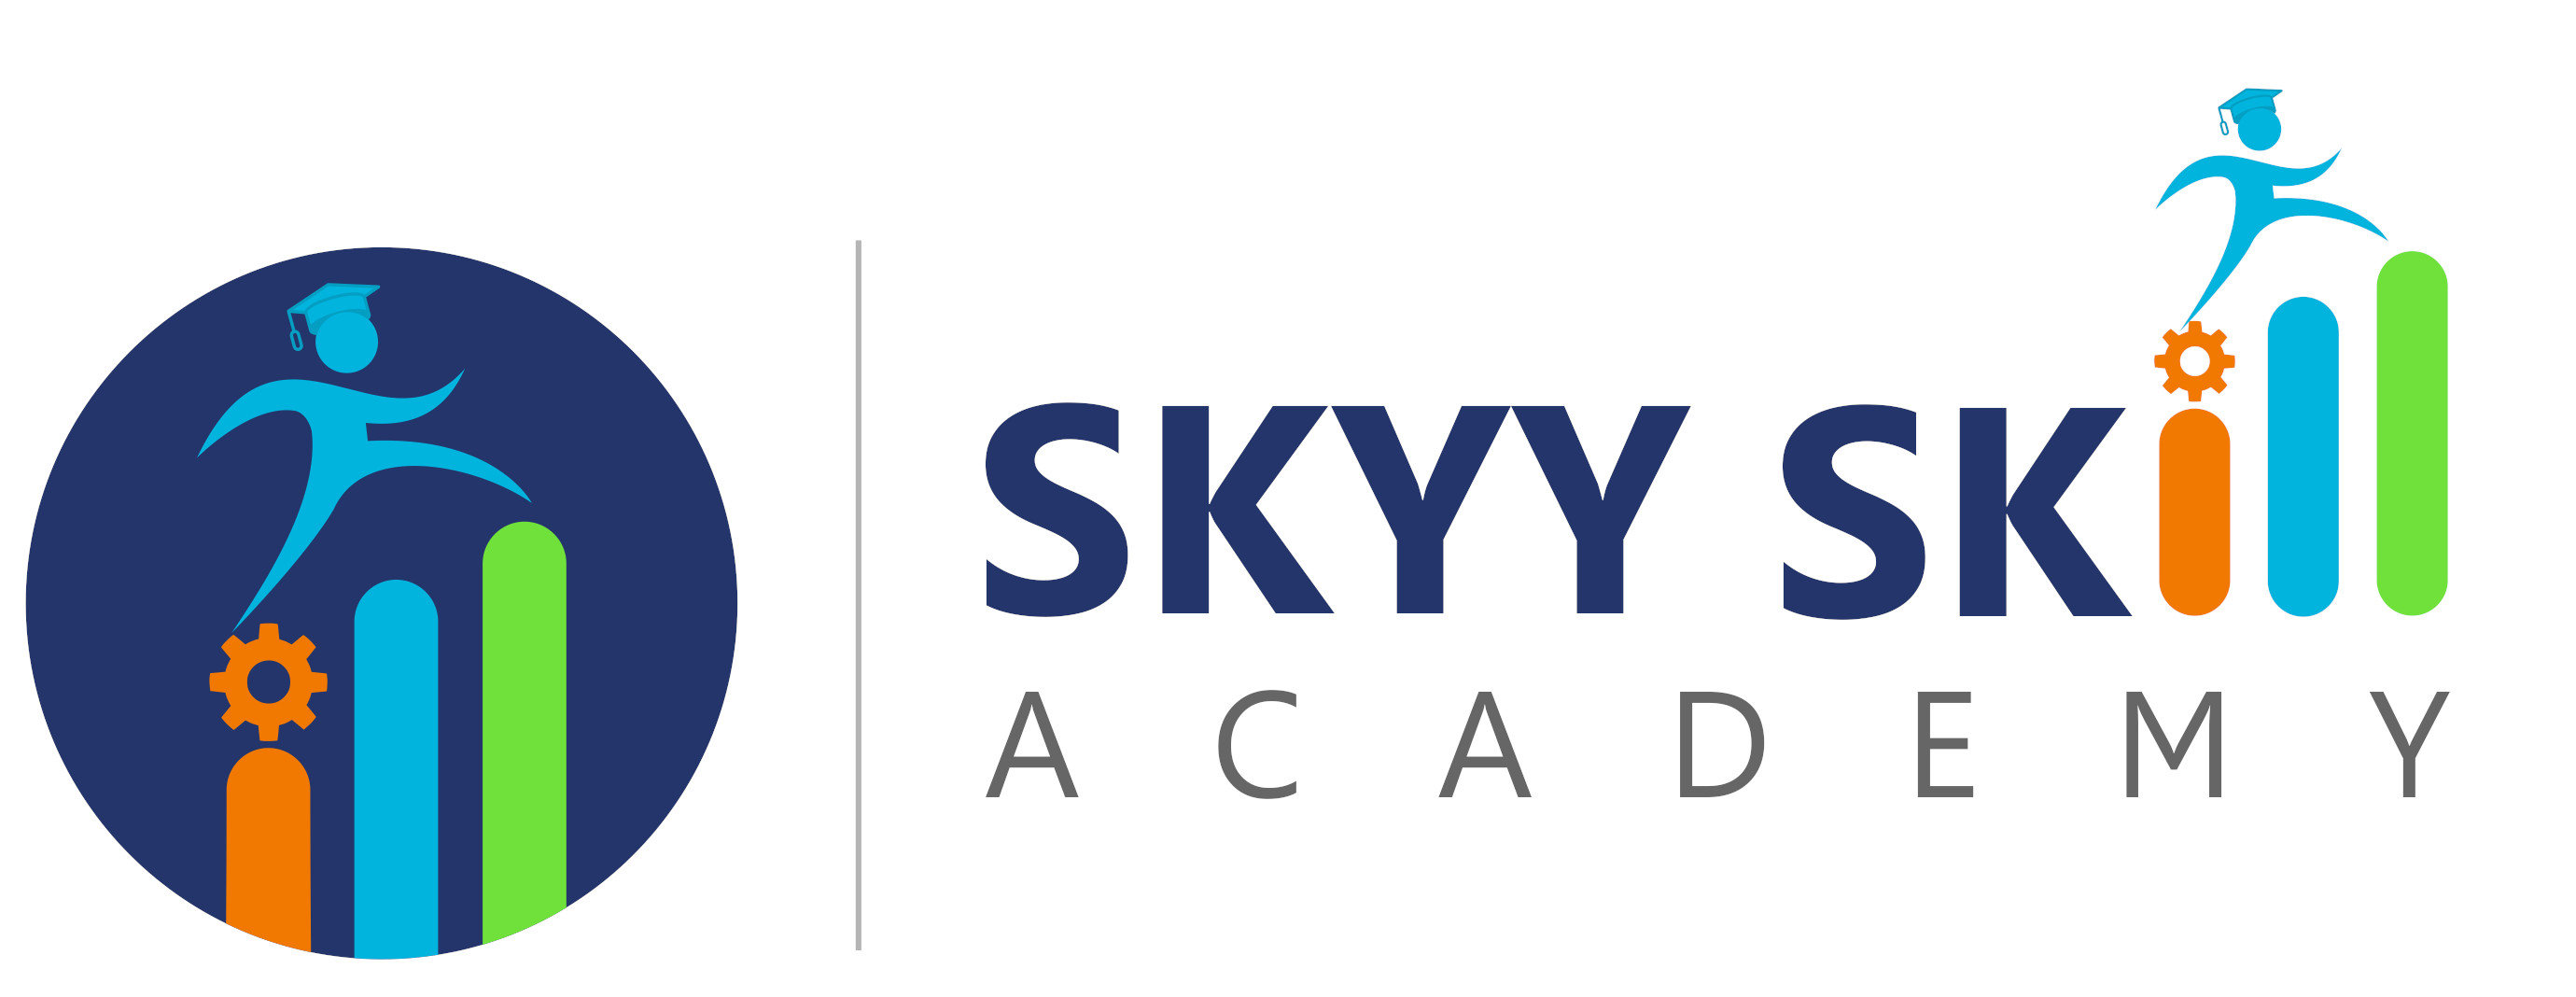 SkyySkill Academy